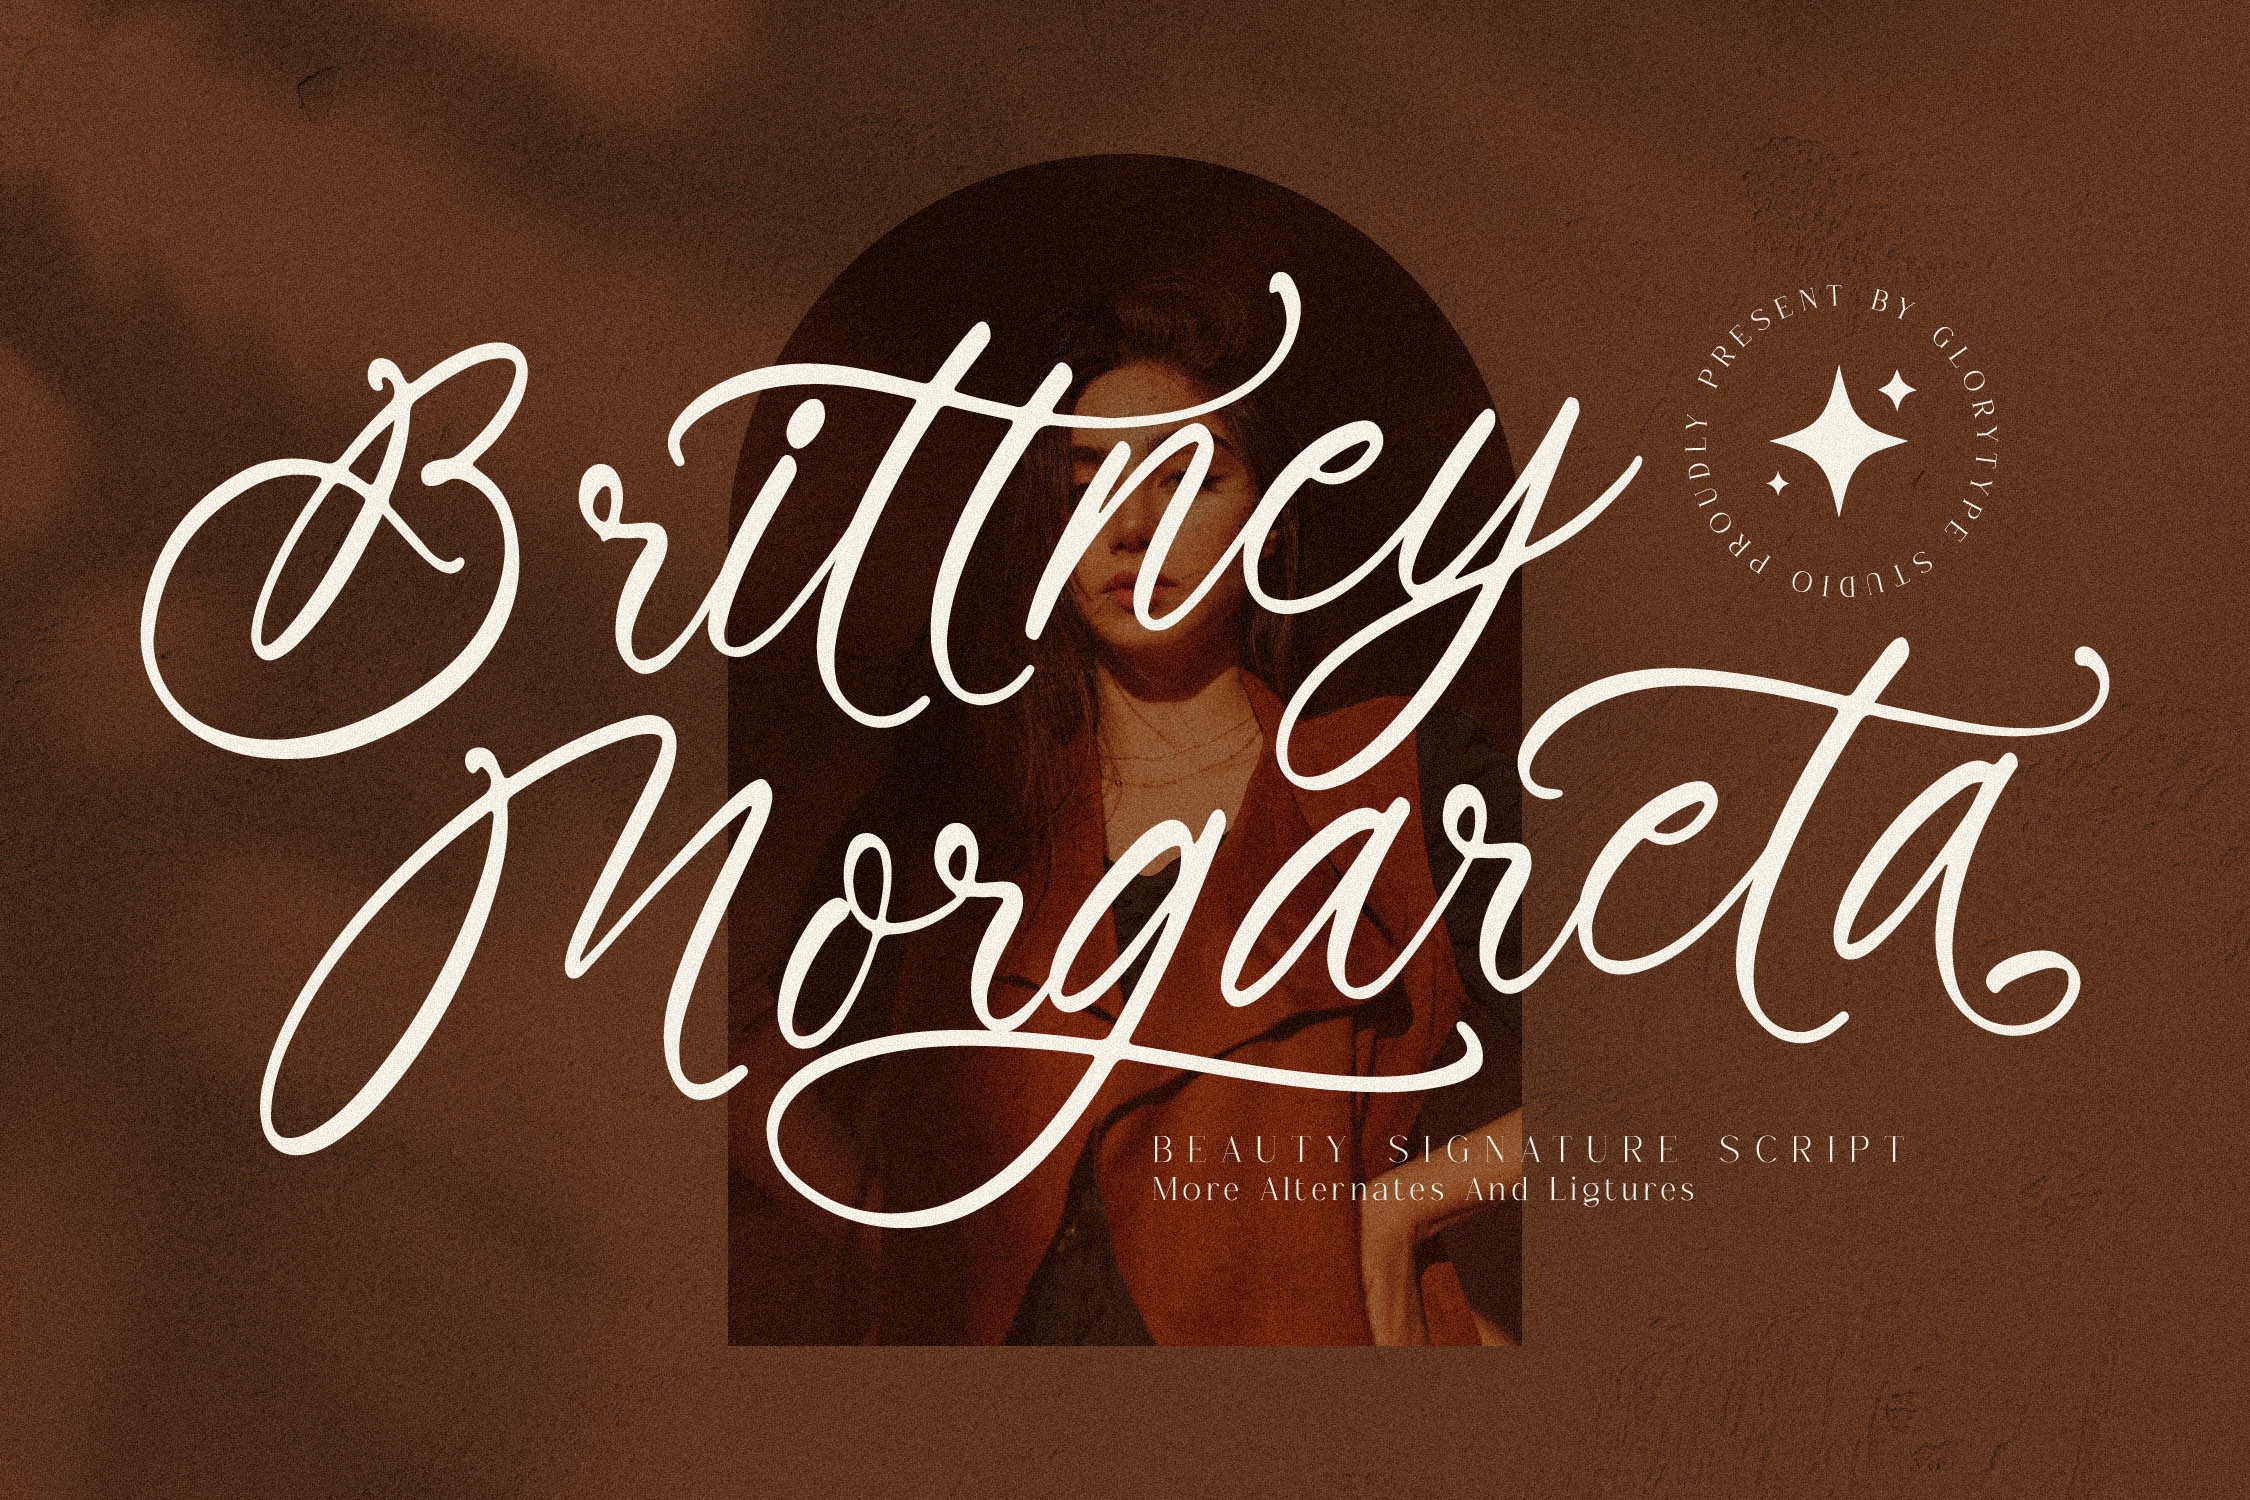 Brittney Morgareta